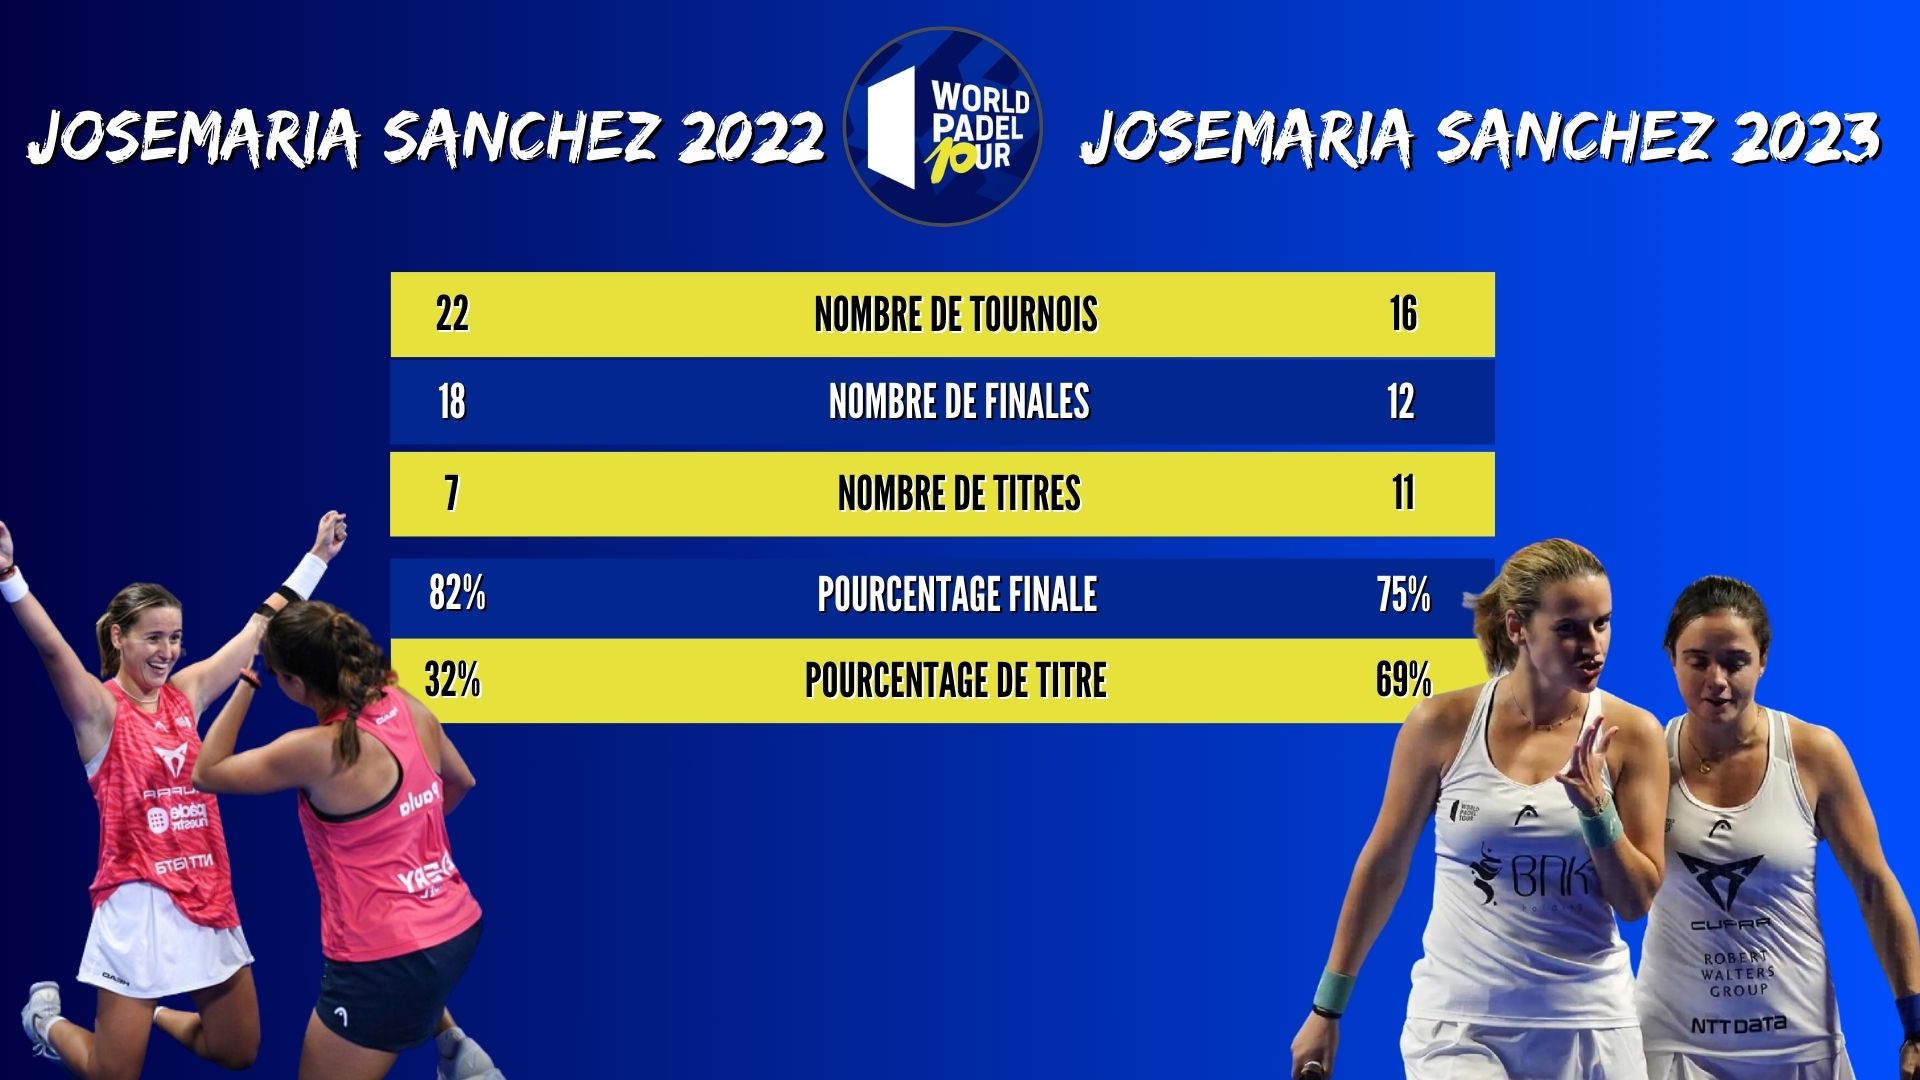 Josemaria Sanchez 2022 contro Josemaria Sanchez 2023